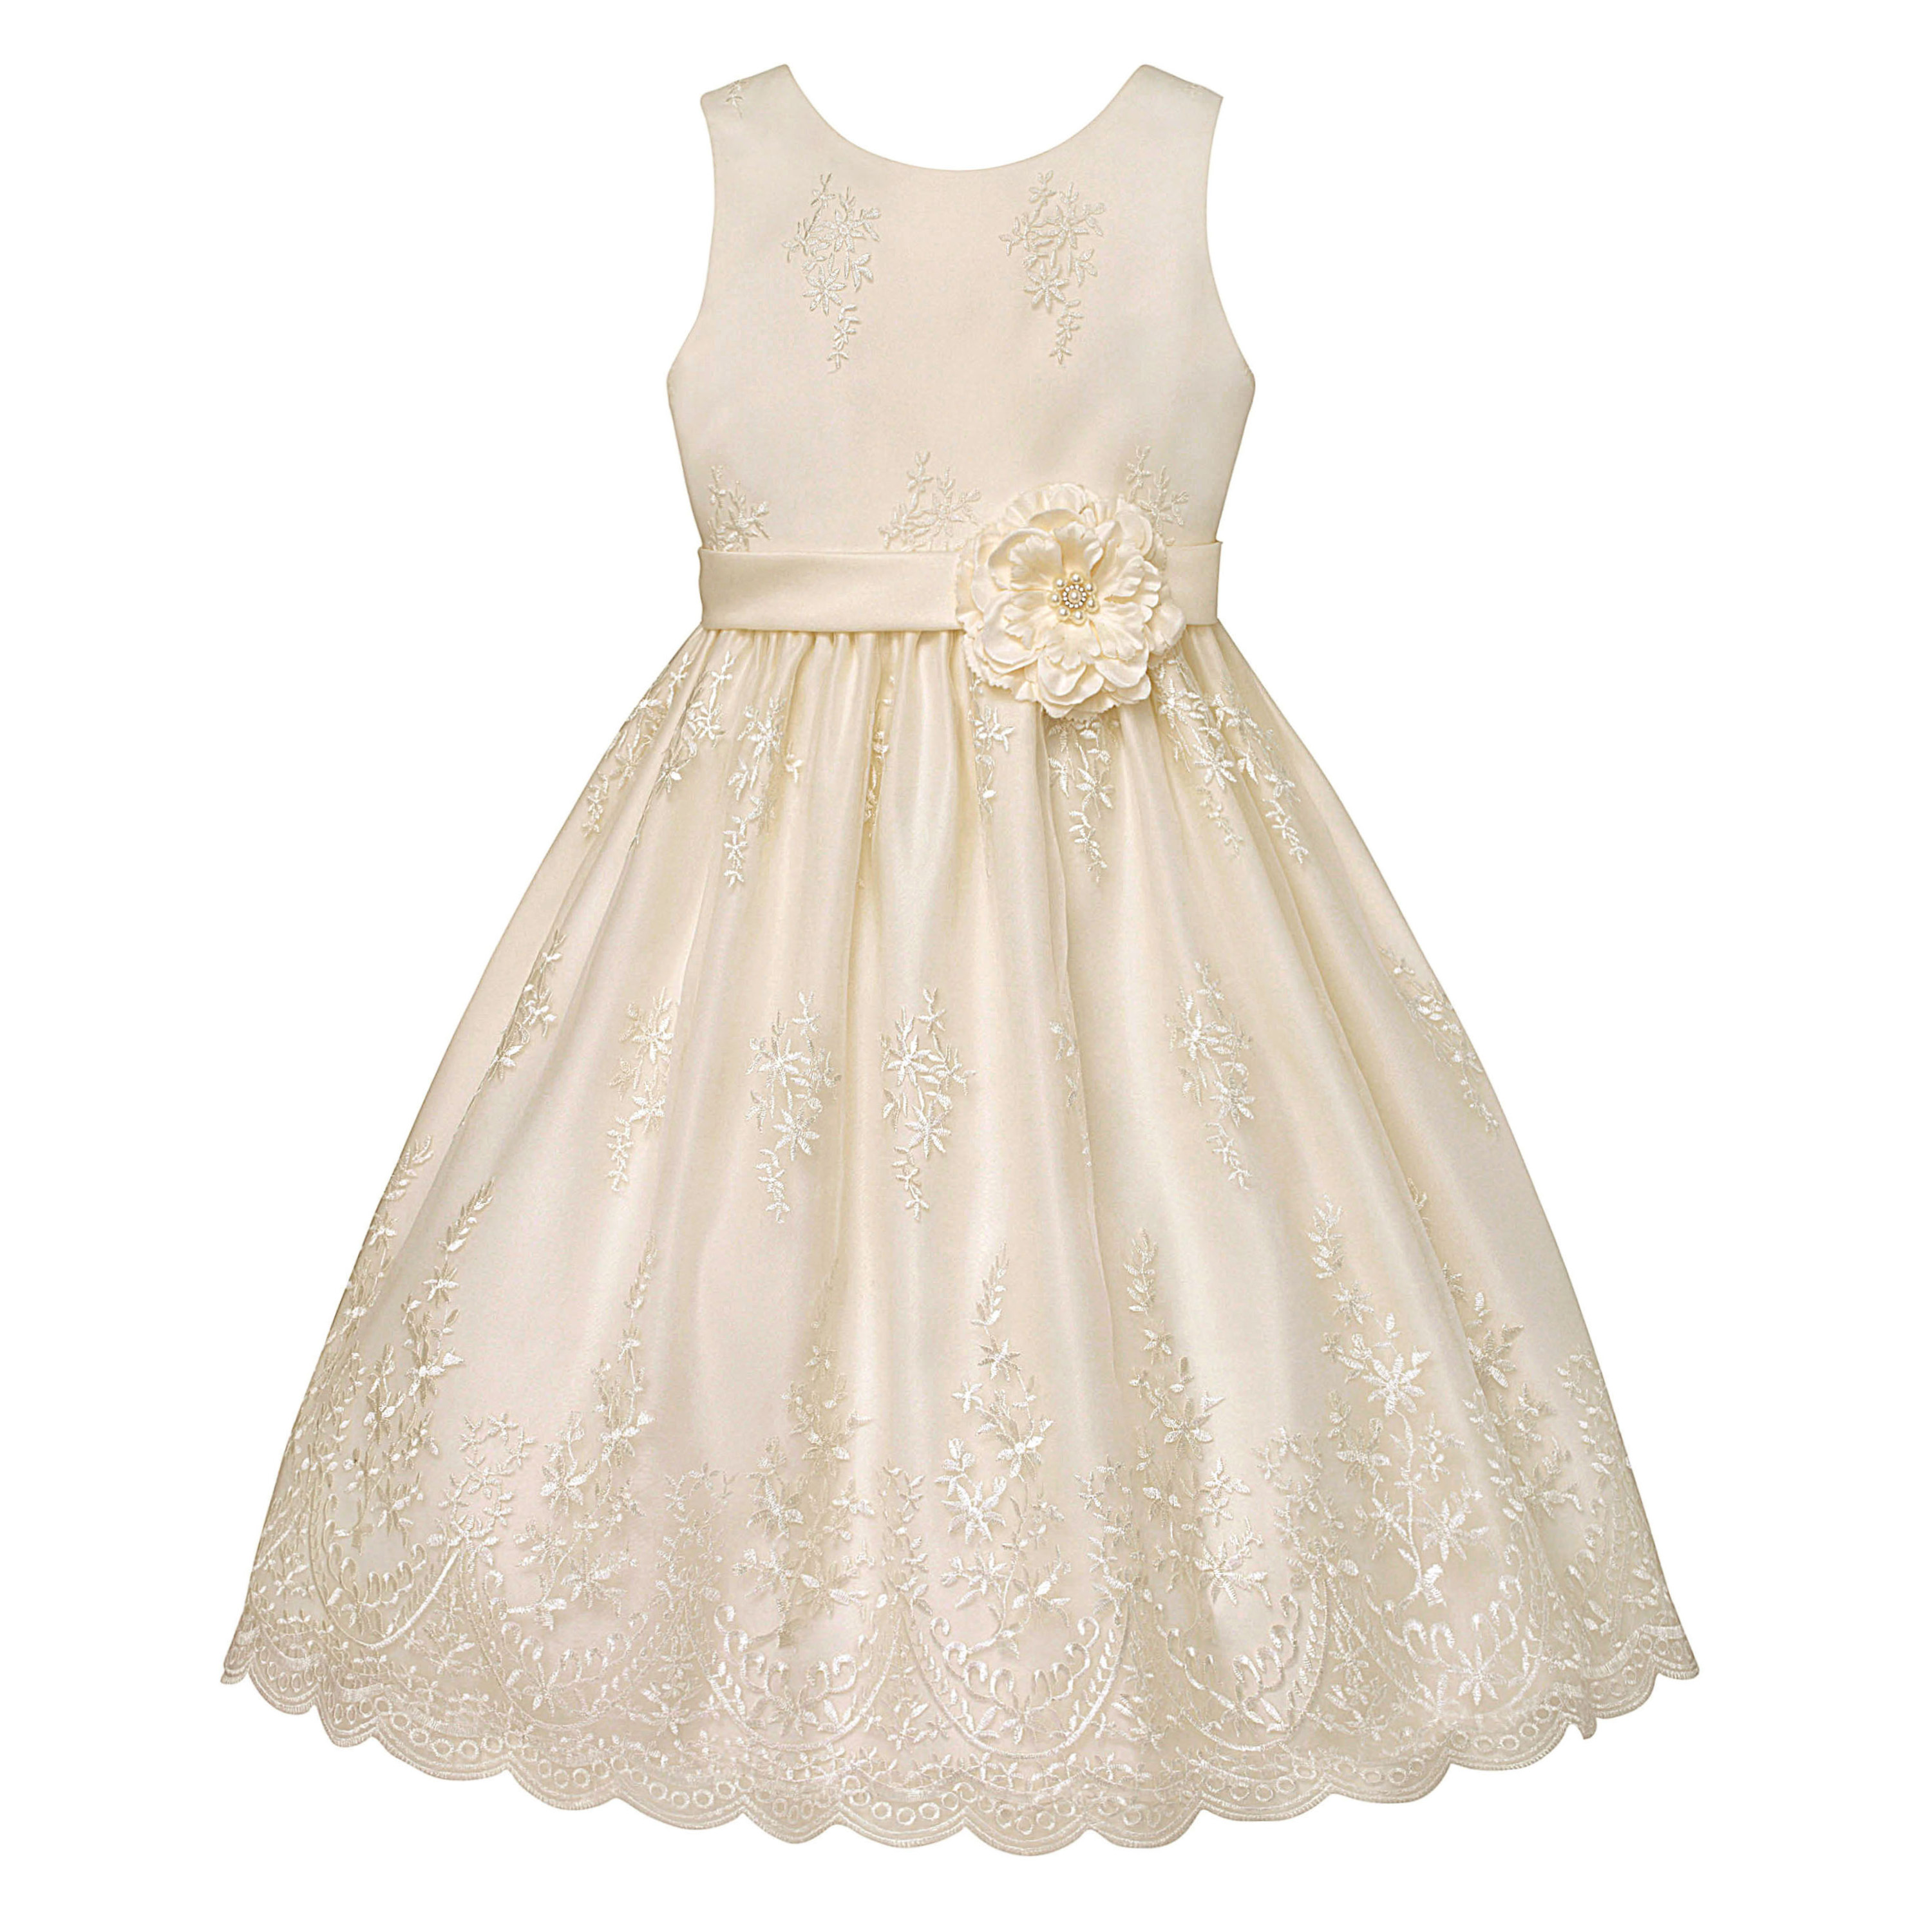 American Princess Girls' Sleeveless Occasion Dress - Floral